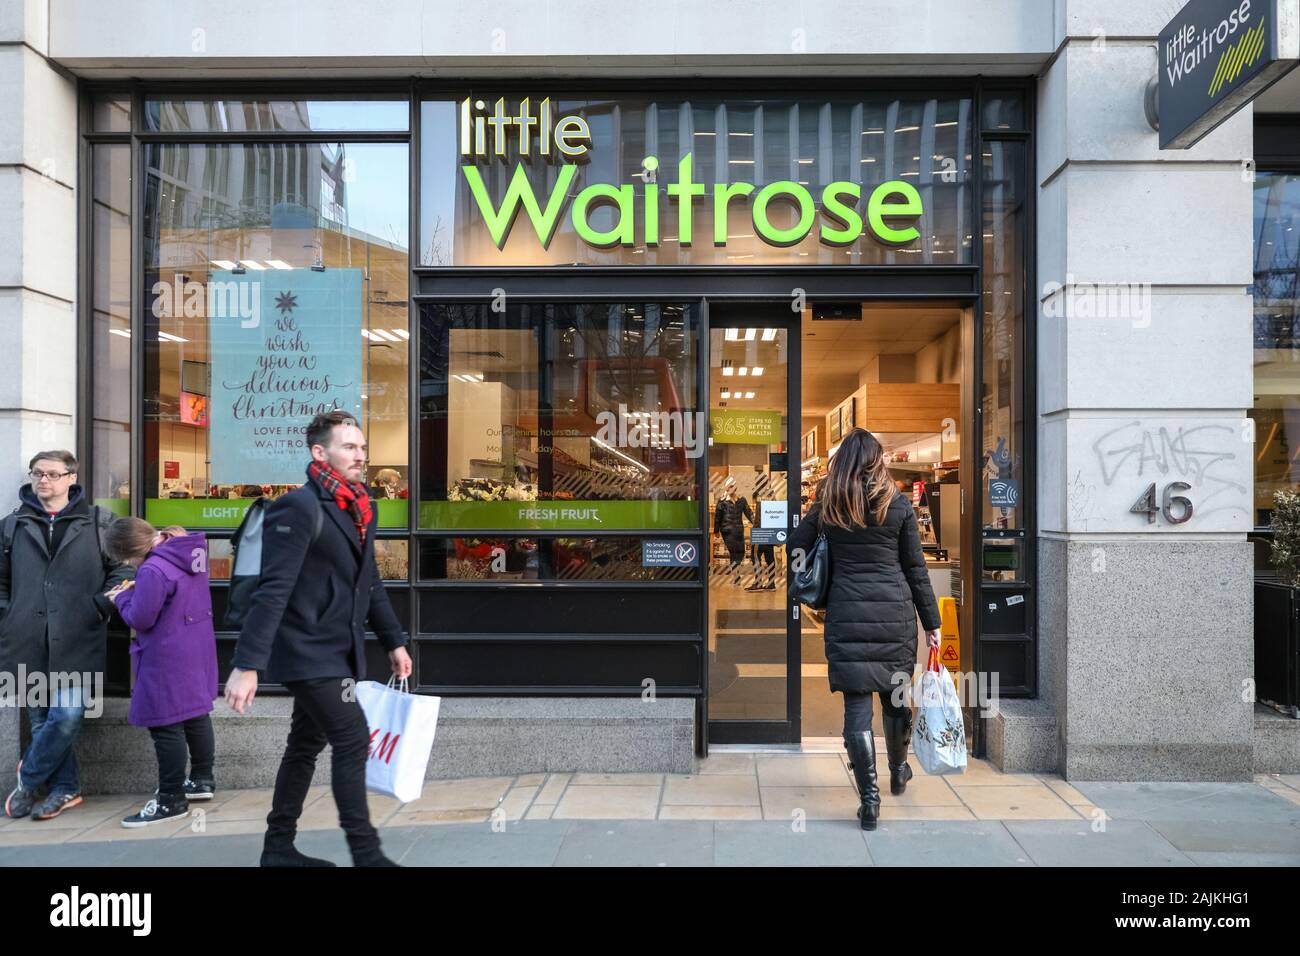 Little Waitrose,small supermarket format convenience store front exterior, people,  London, UK Stock Photo